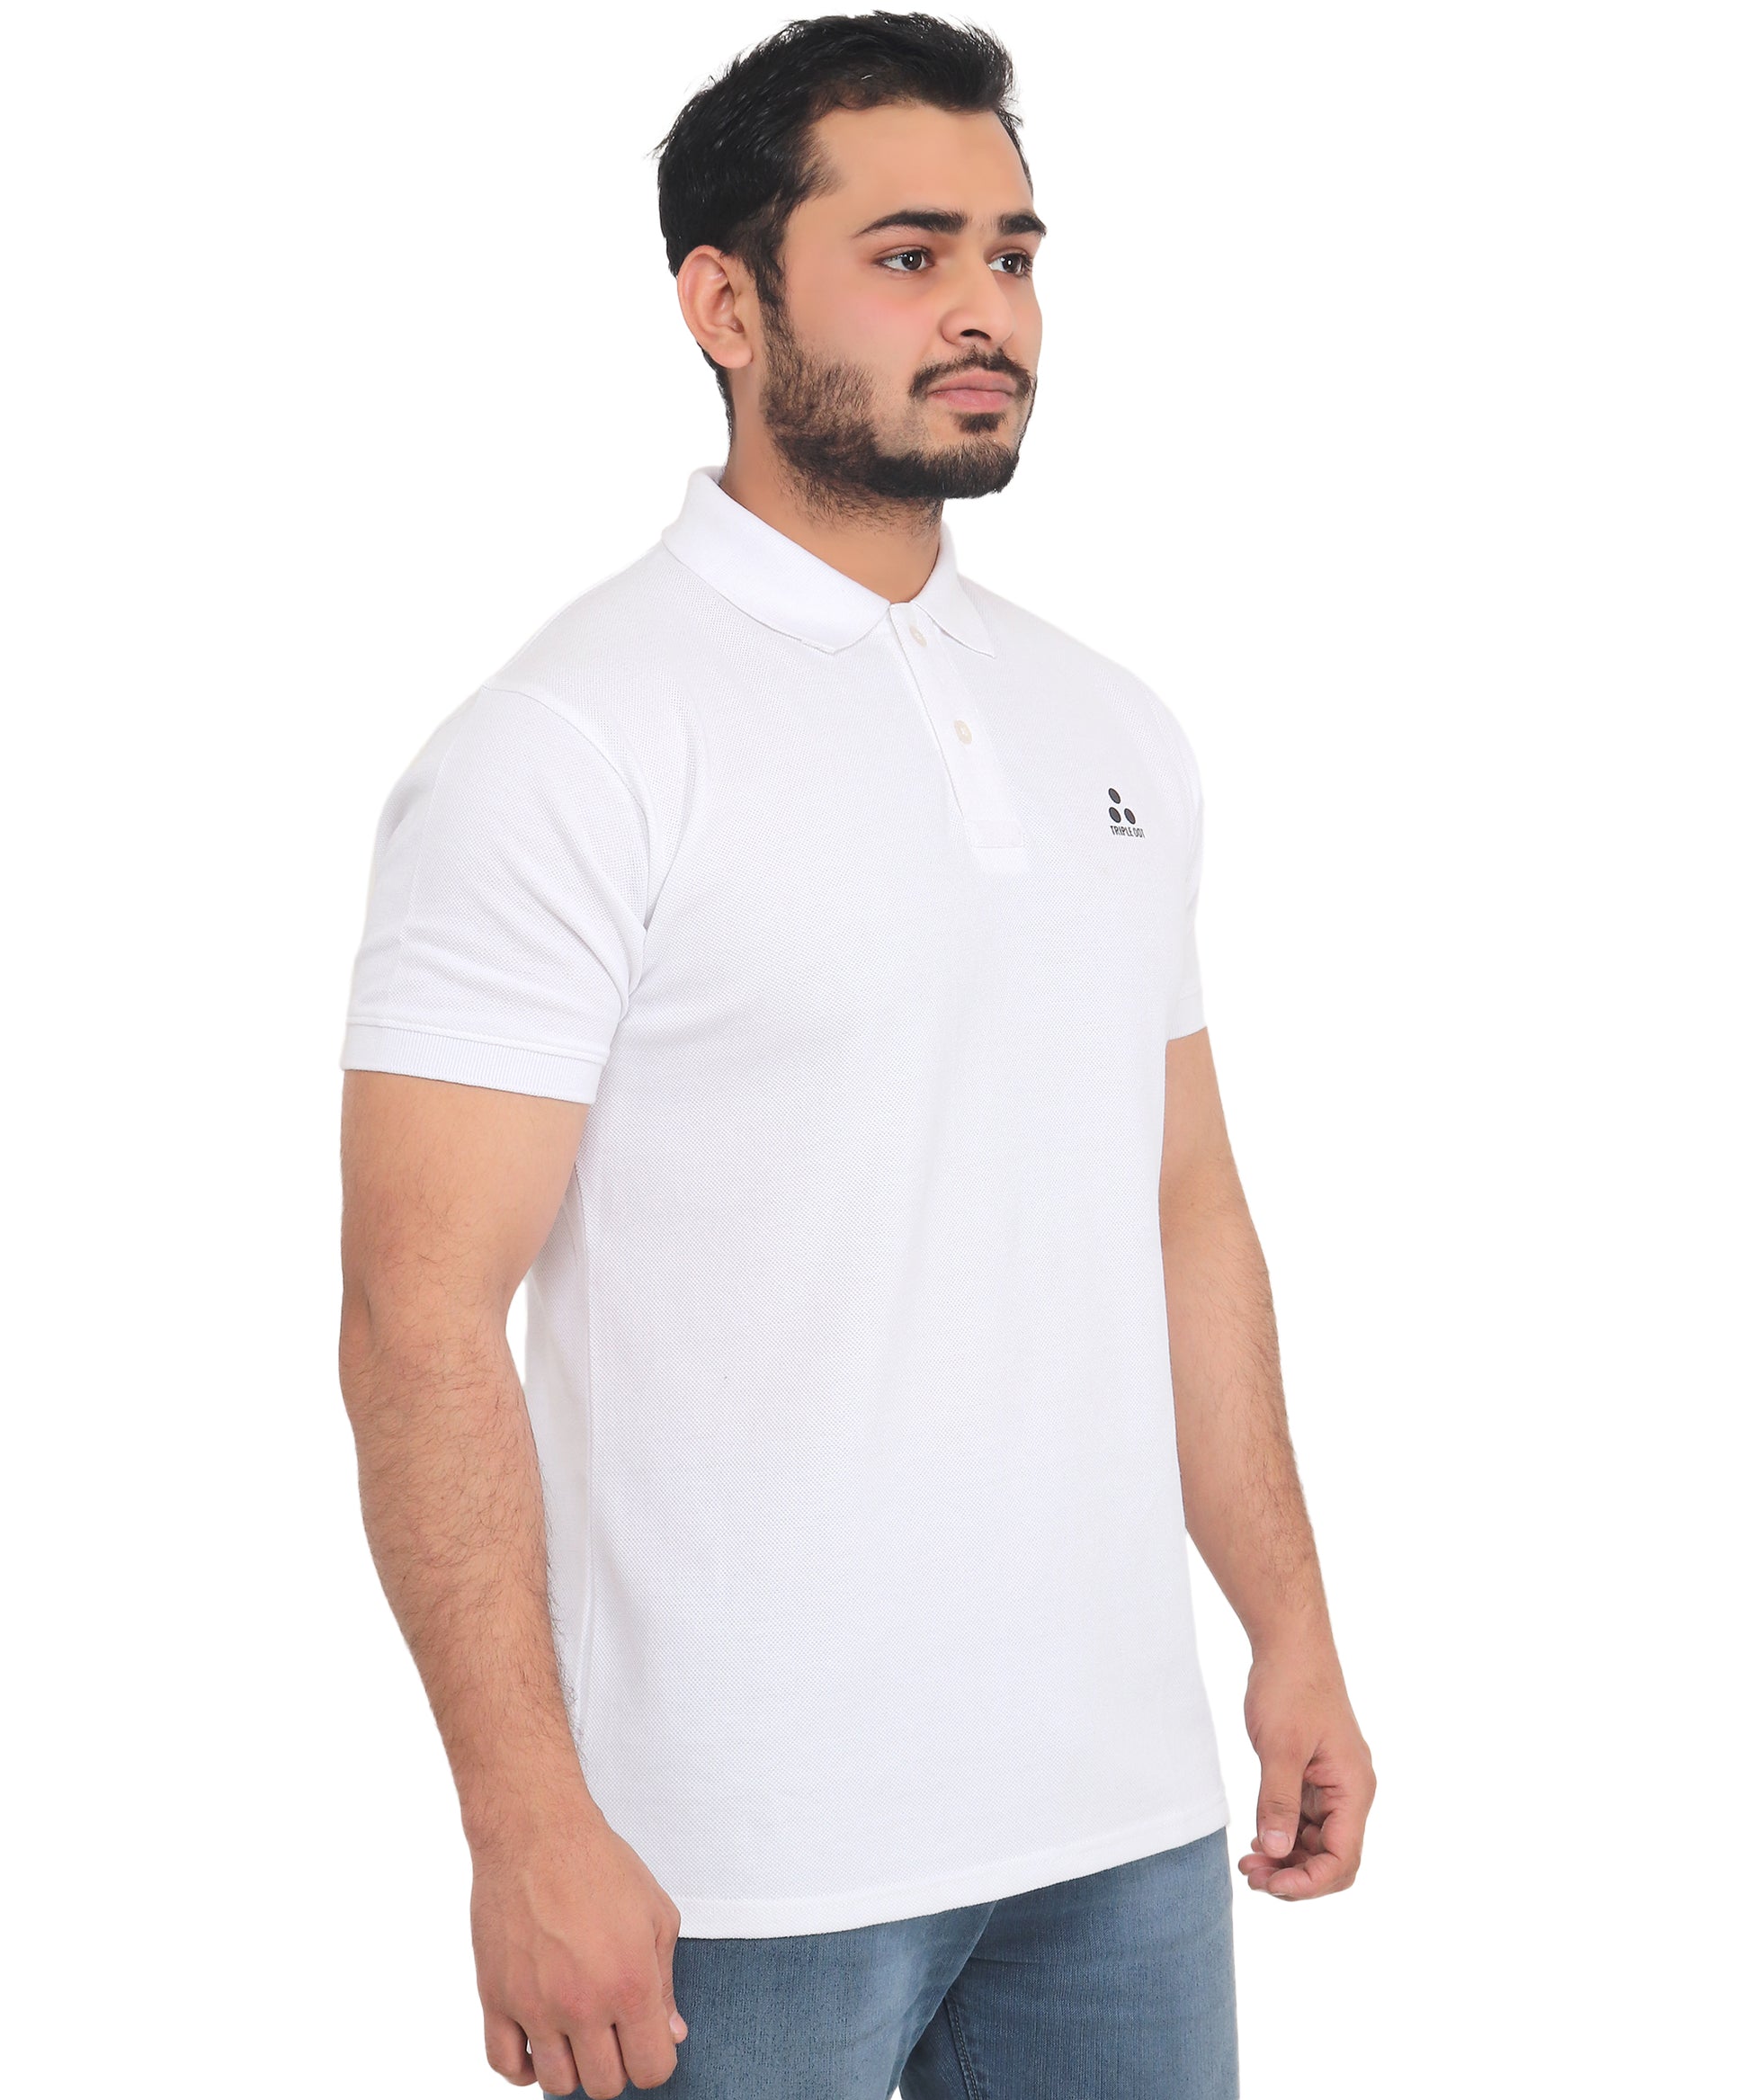 Solid White Poly Cotton Regular Fit Men's T-Shirt - Triple Dot Clothings